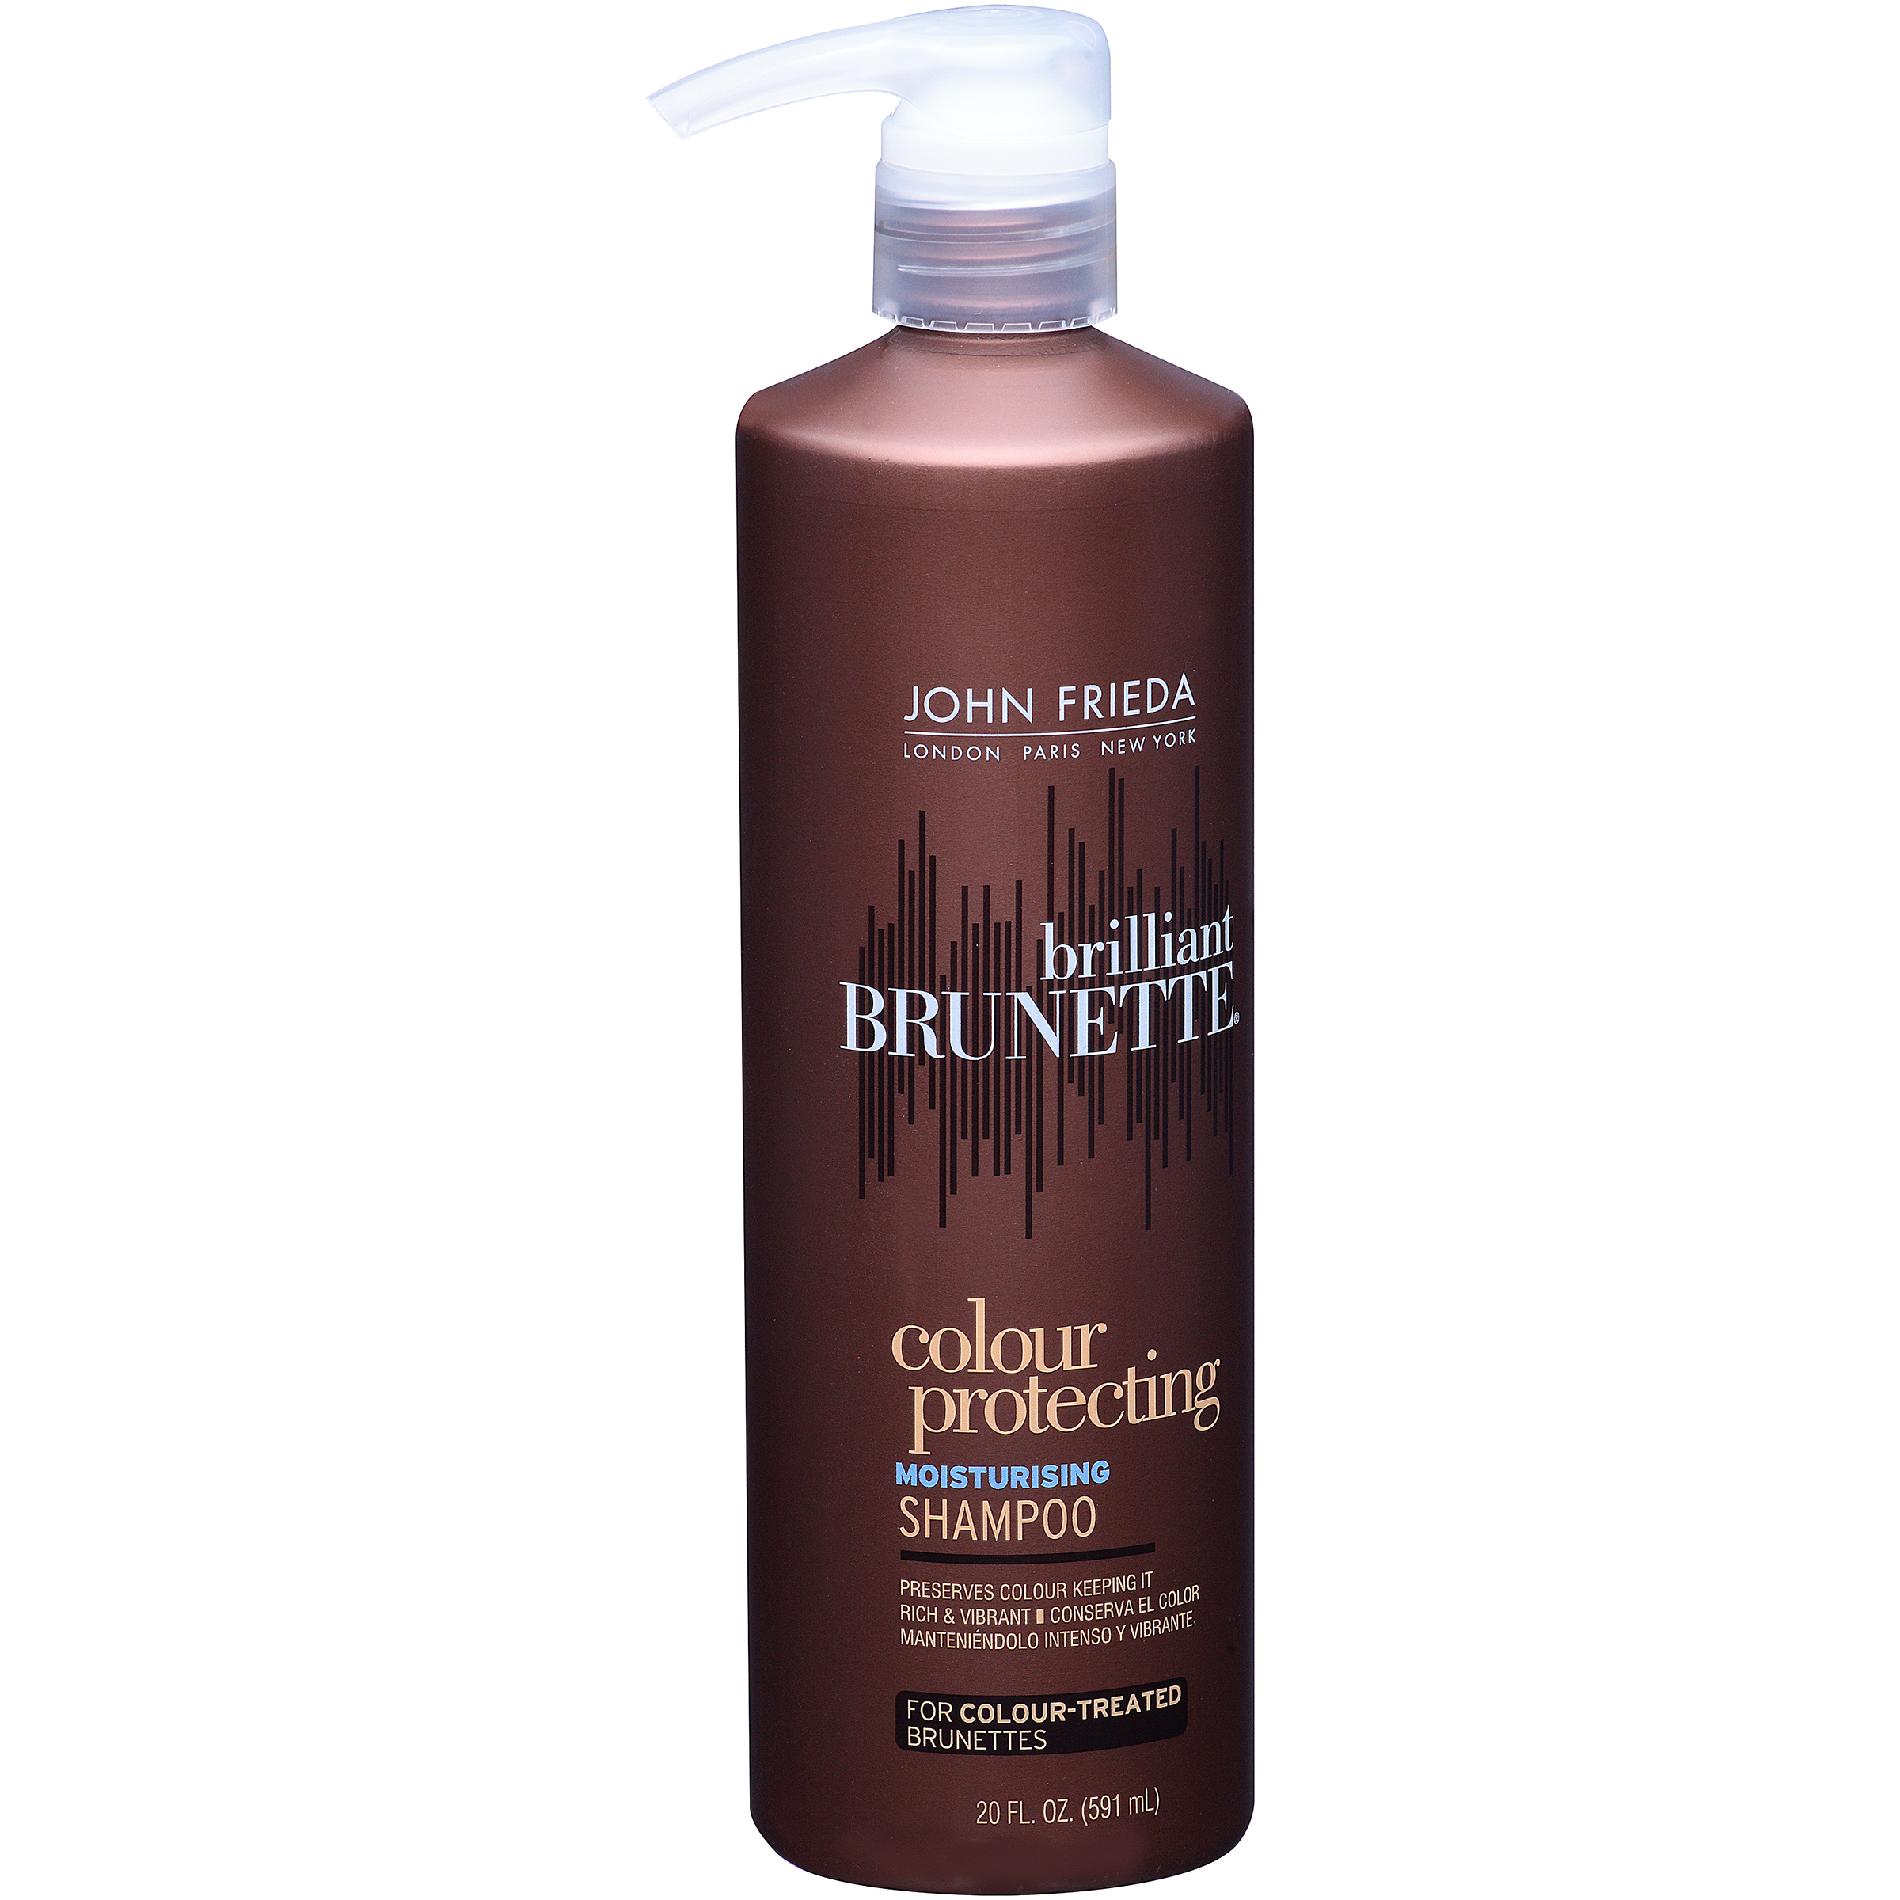 John Frieda Moisturizing Shampoo, Brilliant Brunette Colour Protecting, 20 fl oz (591 ml)